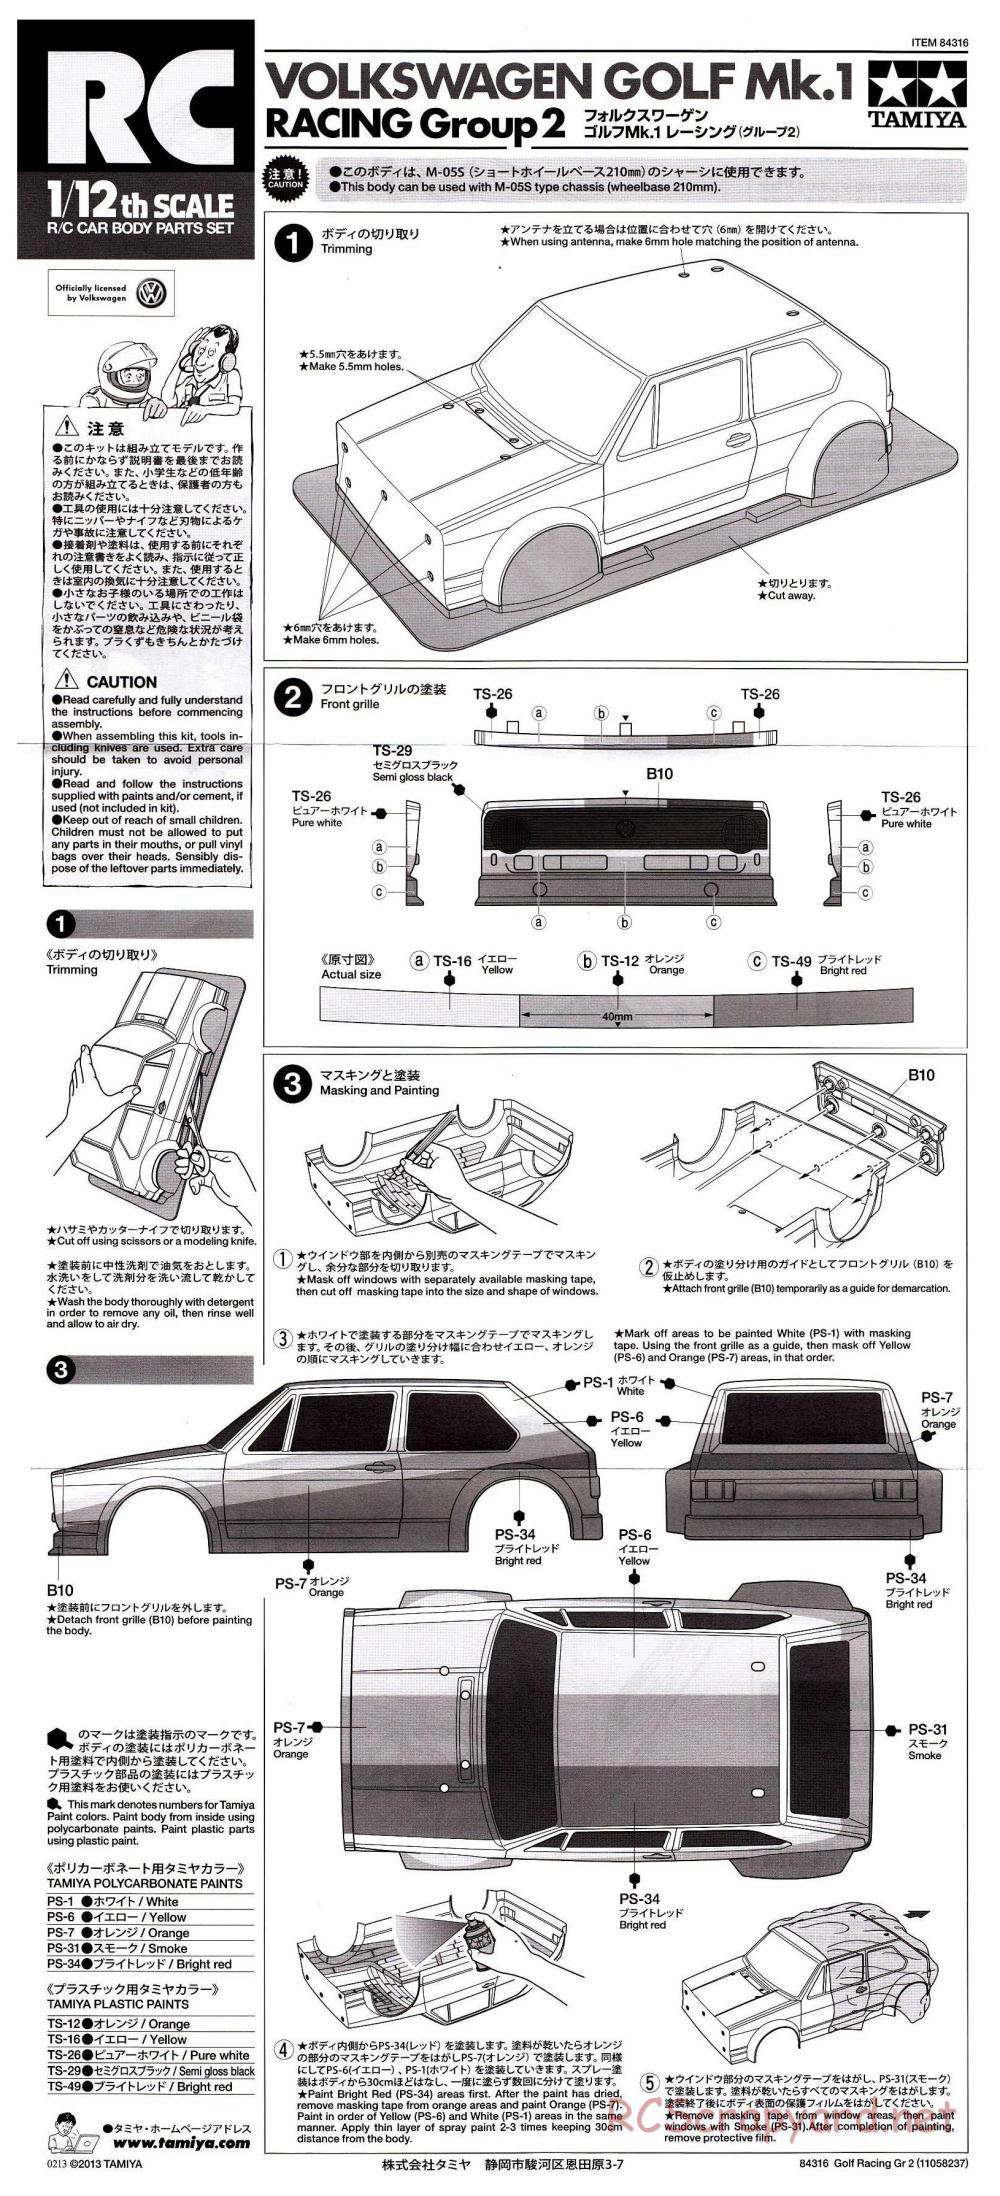 Tamiya - Volkswagen Golf Mk.1 Grp 2 - M-05 Chassis - Body Manual - Page 1